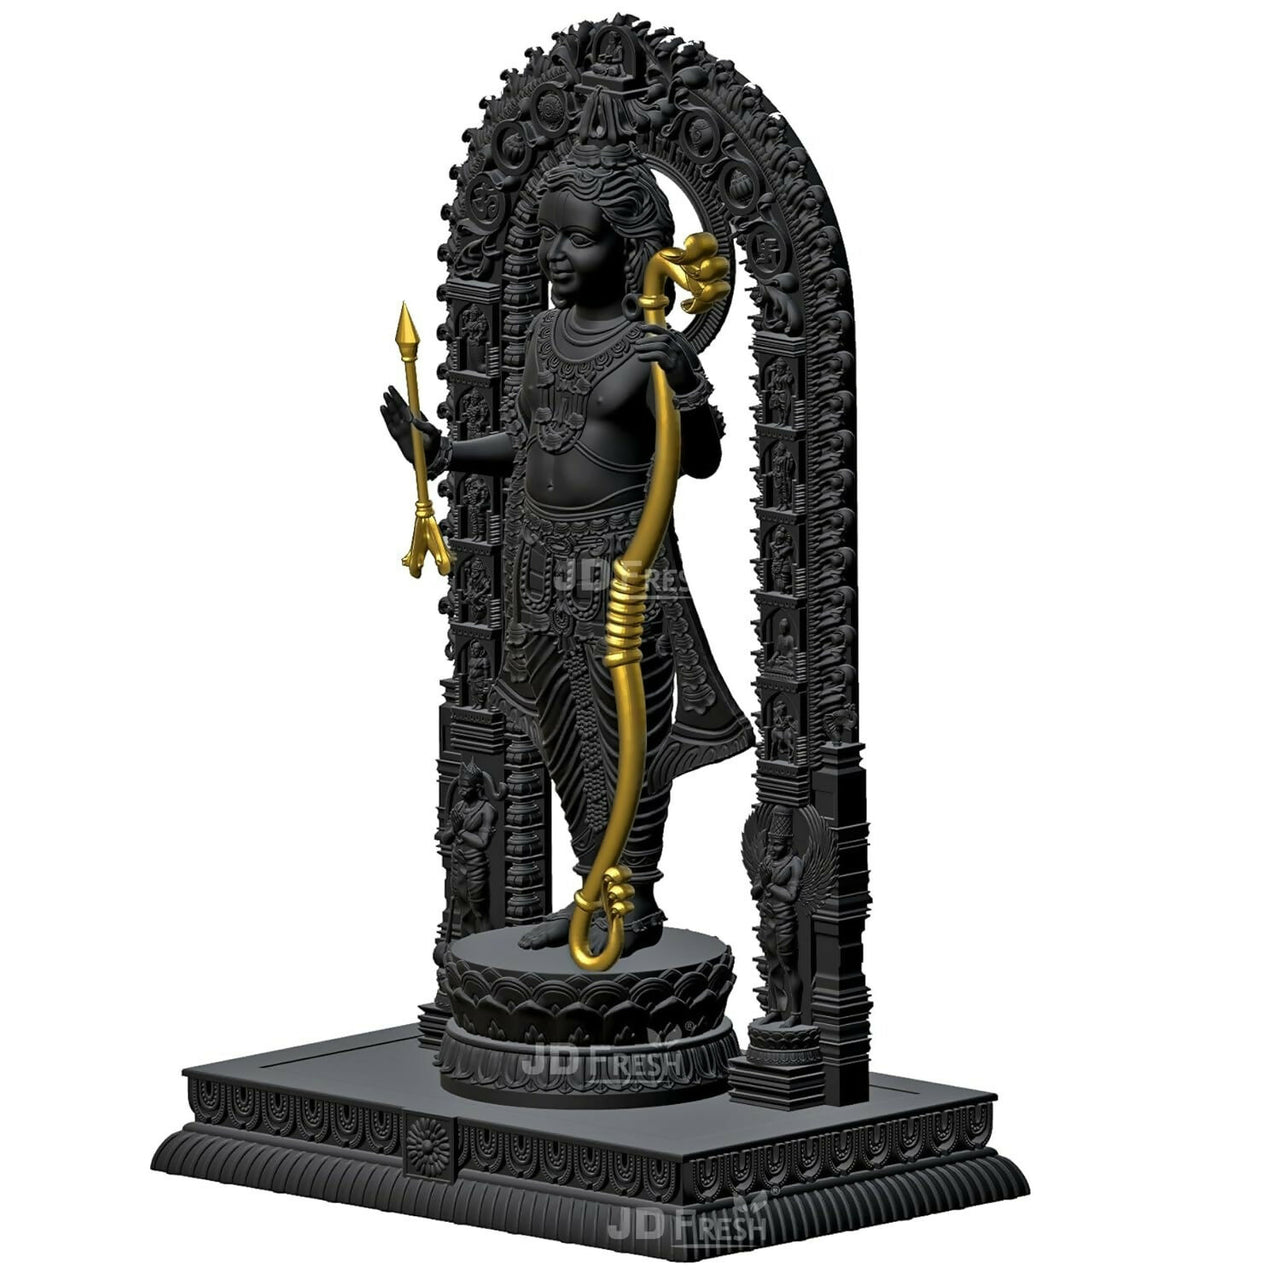 Jd Fresh Shree Ram Lalla Murti In Ayodhya Mandir Ramlalla Temple Idol - Distacart